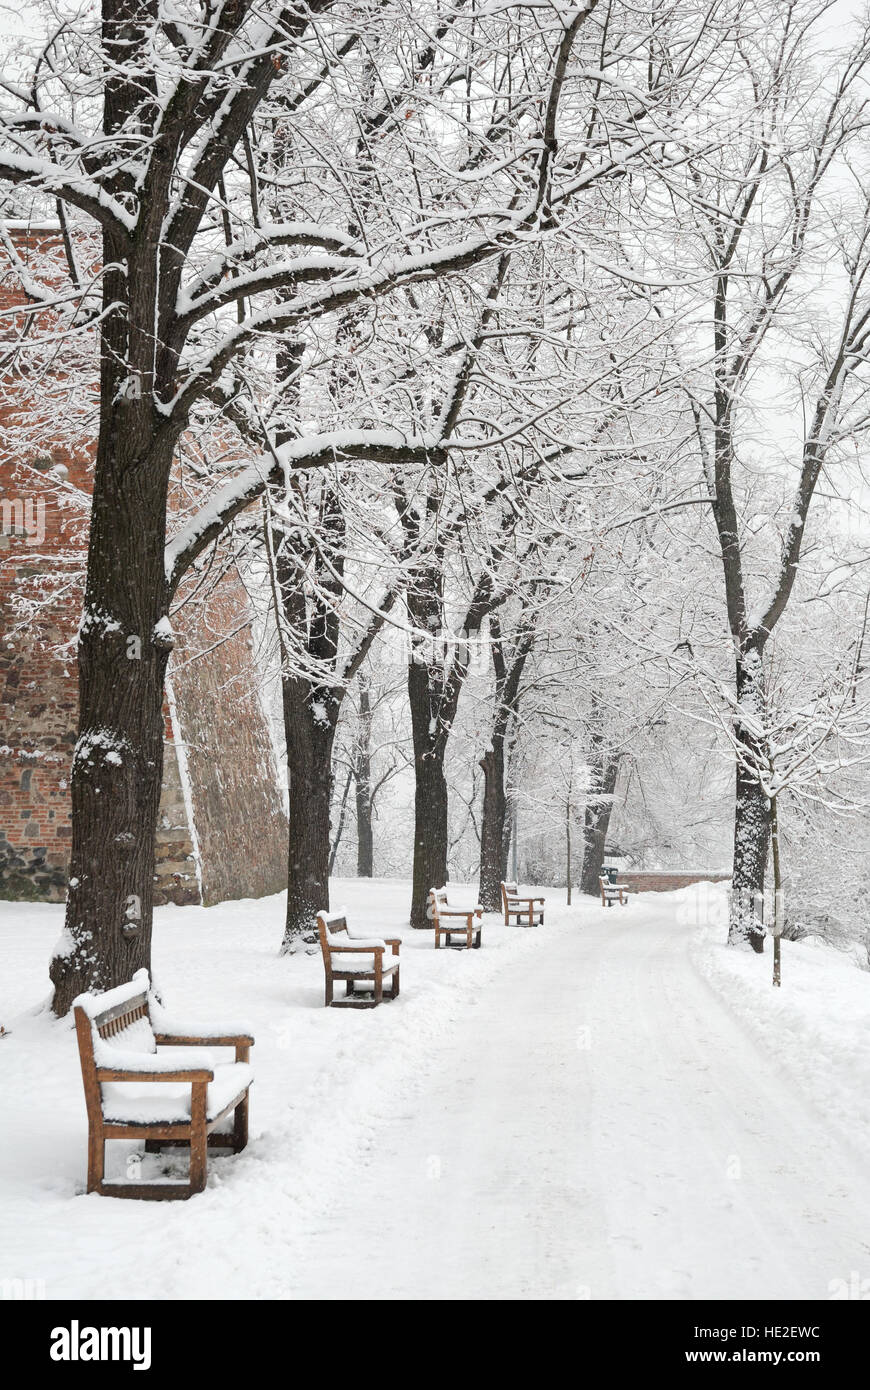 Panchine e alberi coperti di neve pesante Foto Stock